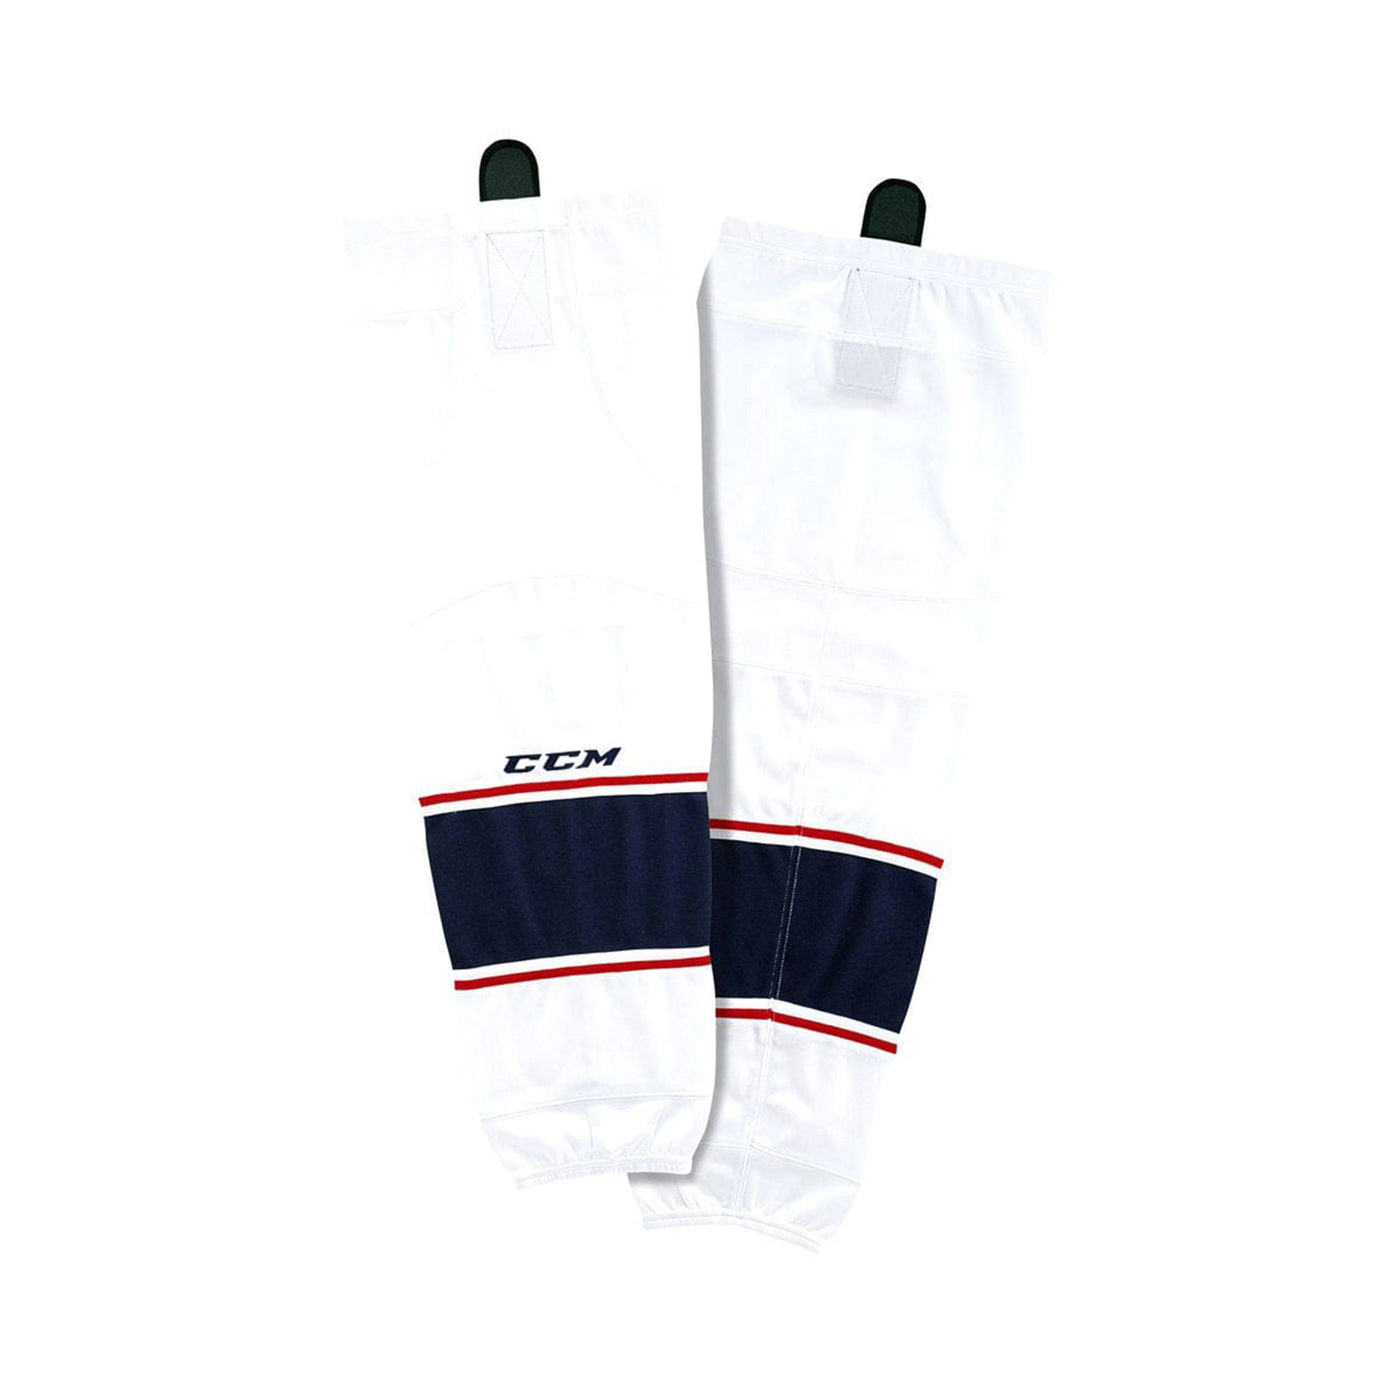 Columbus Blue Jackets Away CCM Quicklite 8000 Hockey Socks - The Hockey Shop Source For Sports